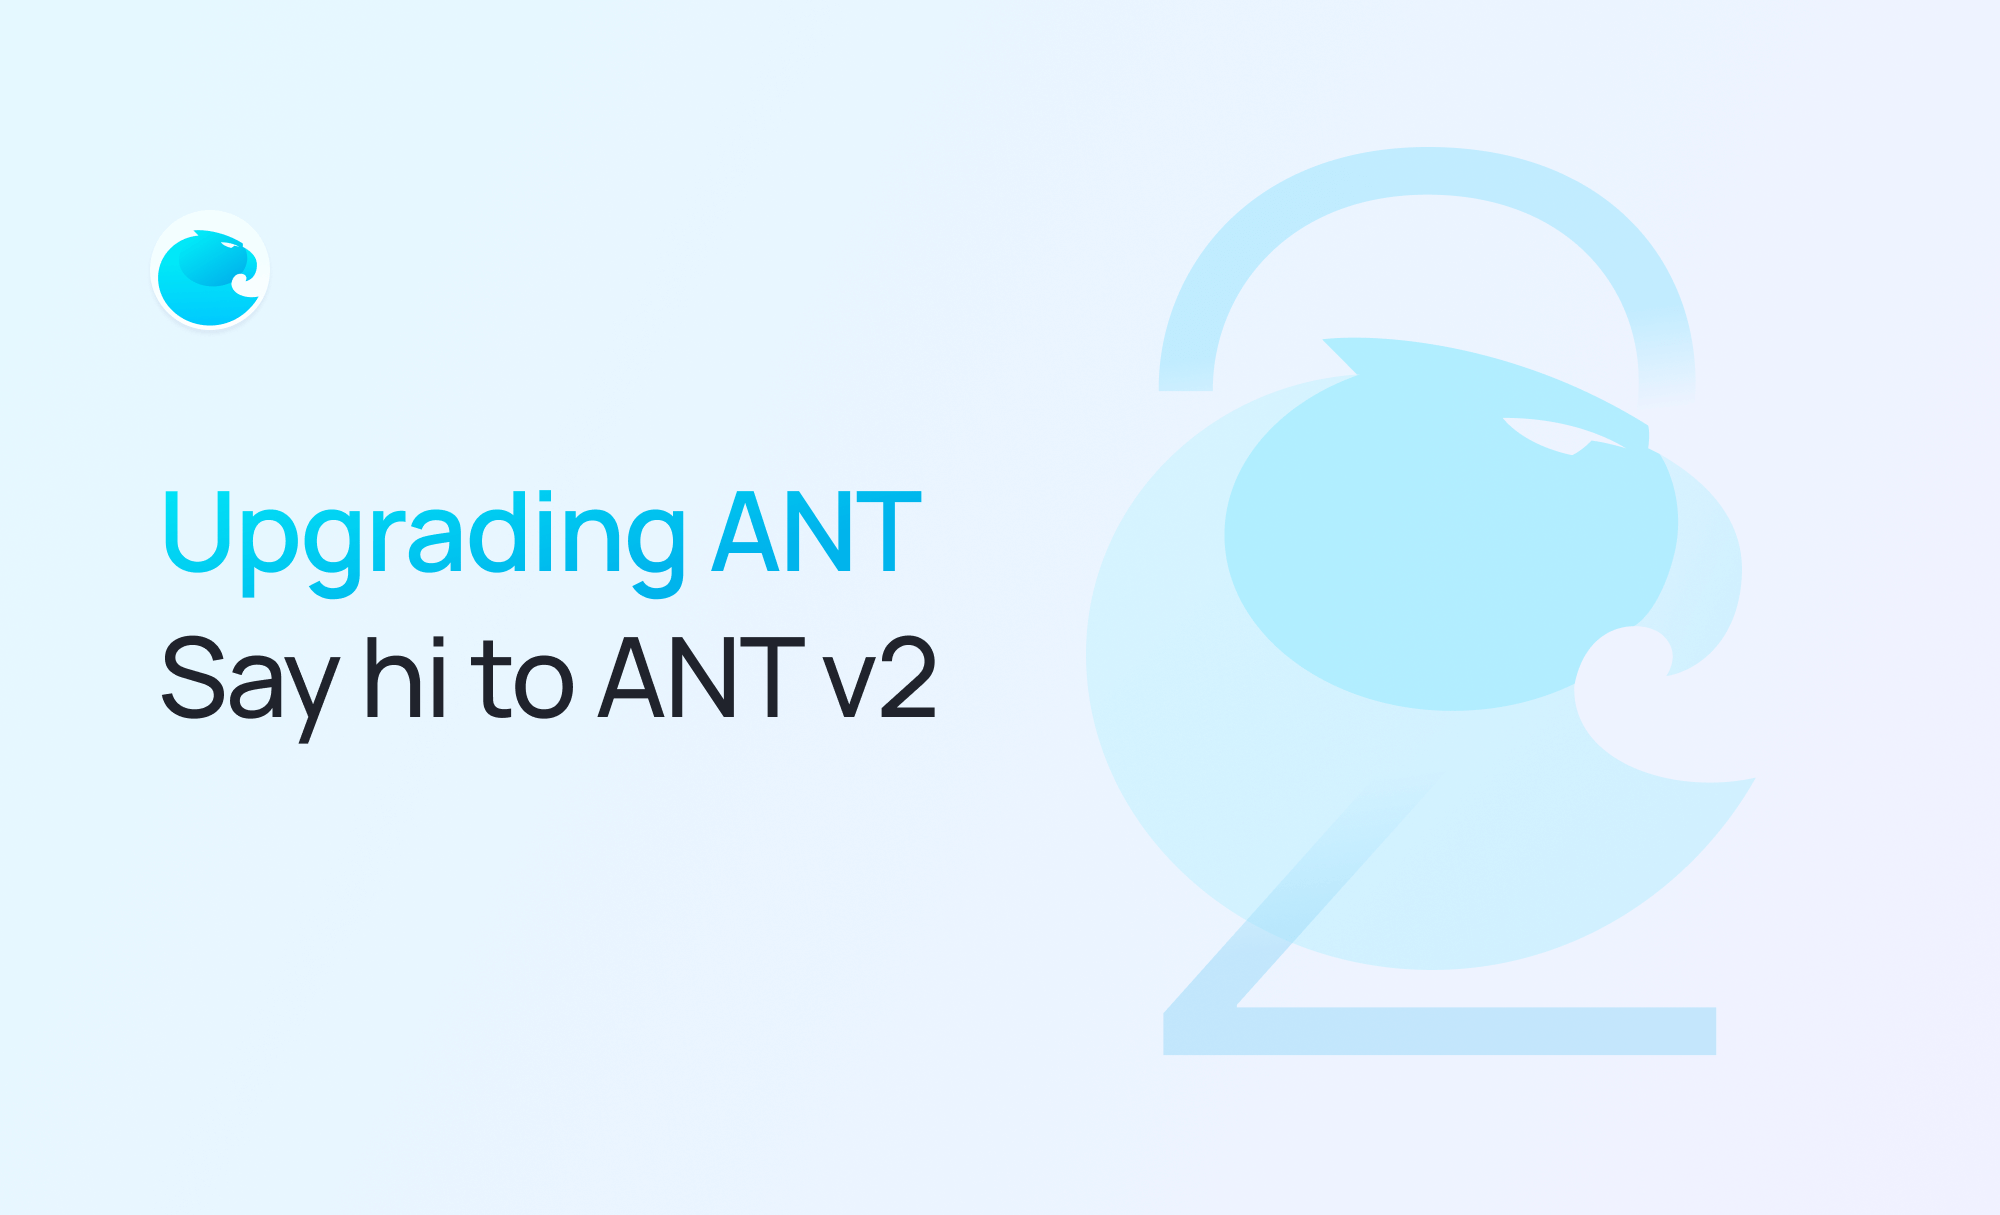 Upgrading ANT: Say hi to ANT v2